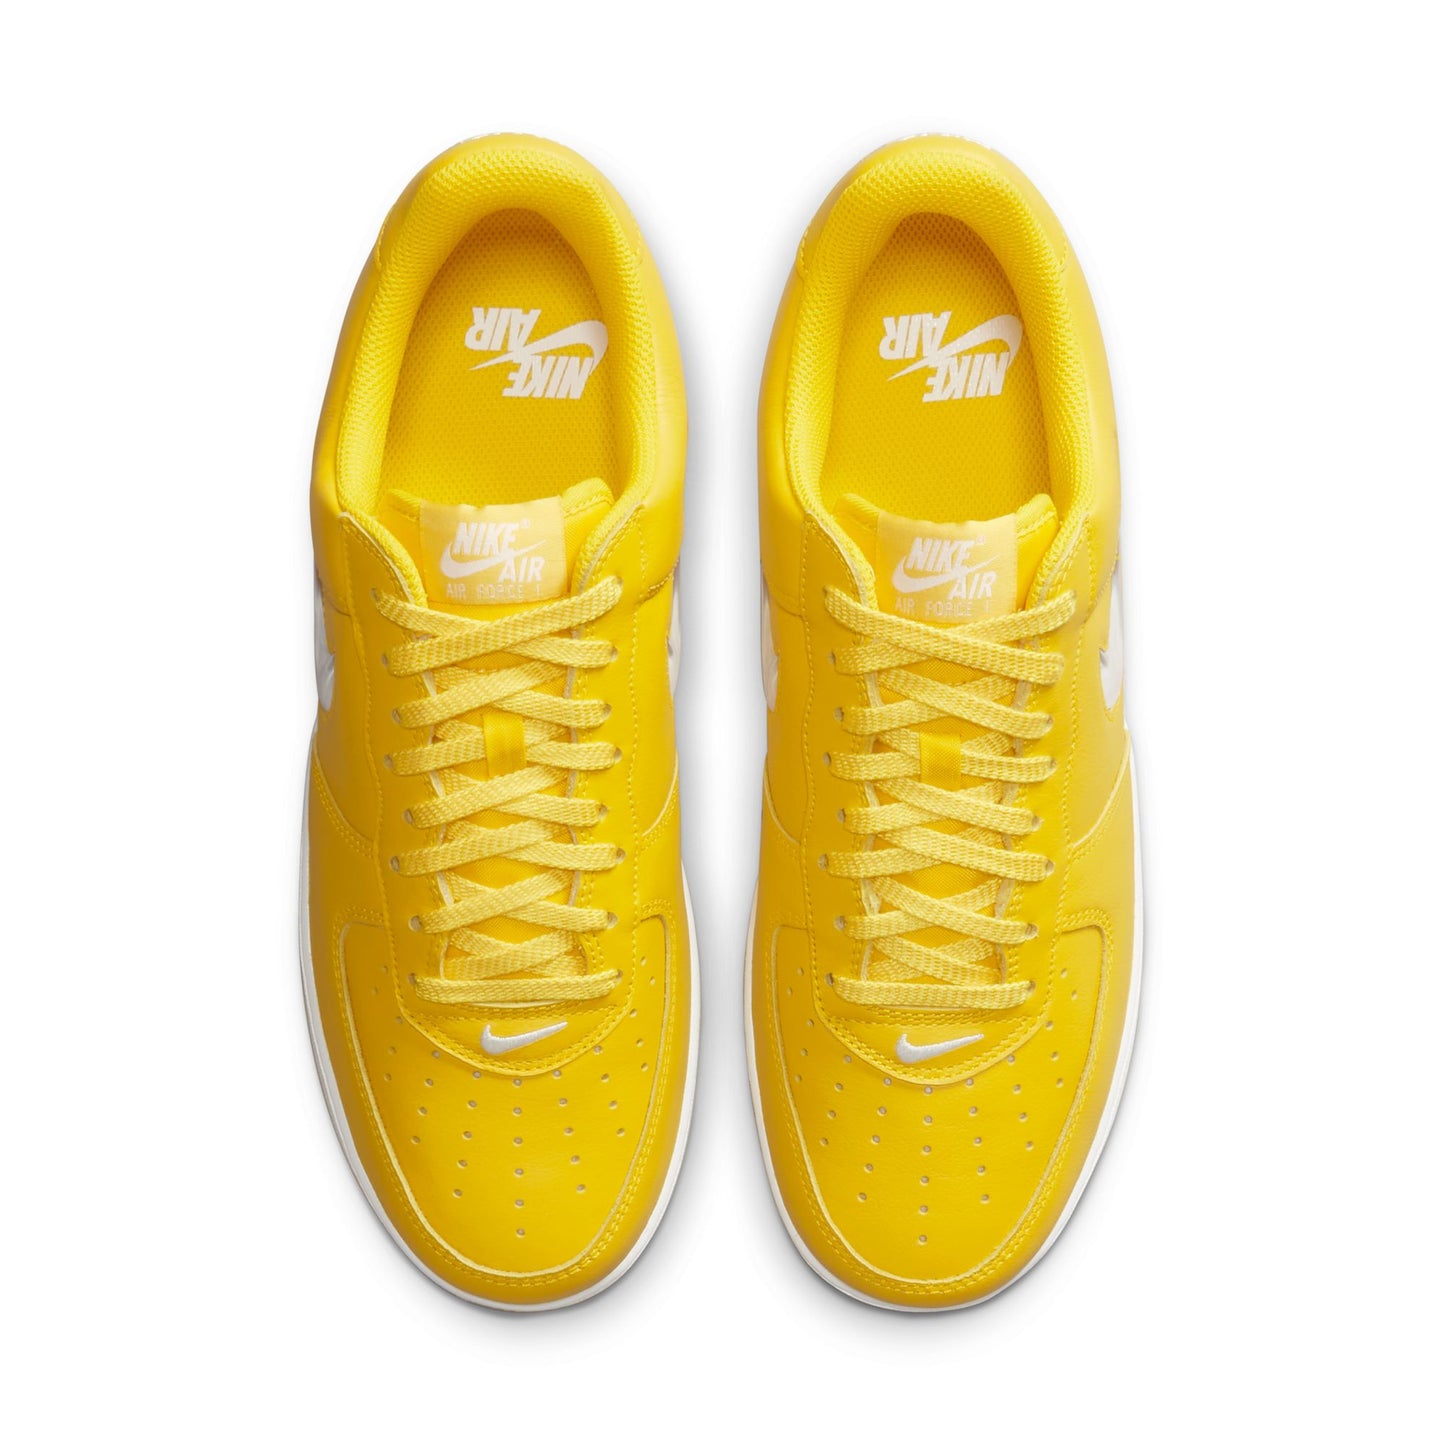 Nike Air Force 1 Low Retro Jewel “Speed Yellow” - FJ1044-700